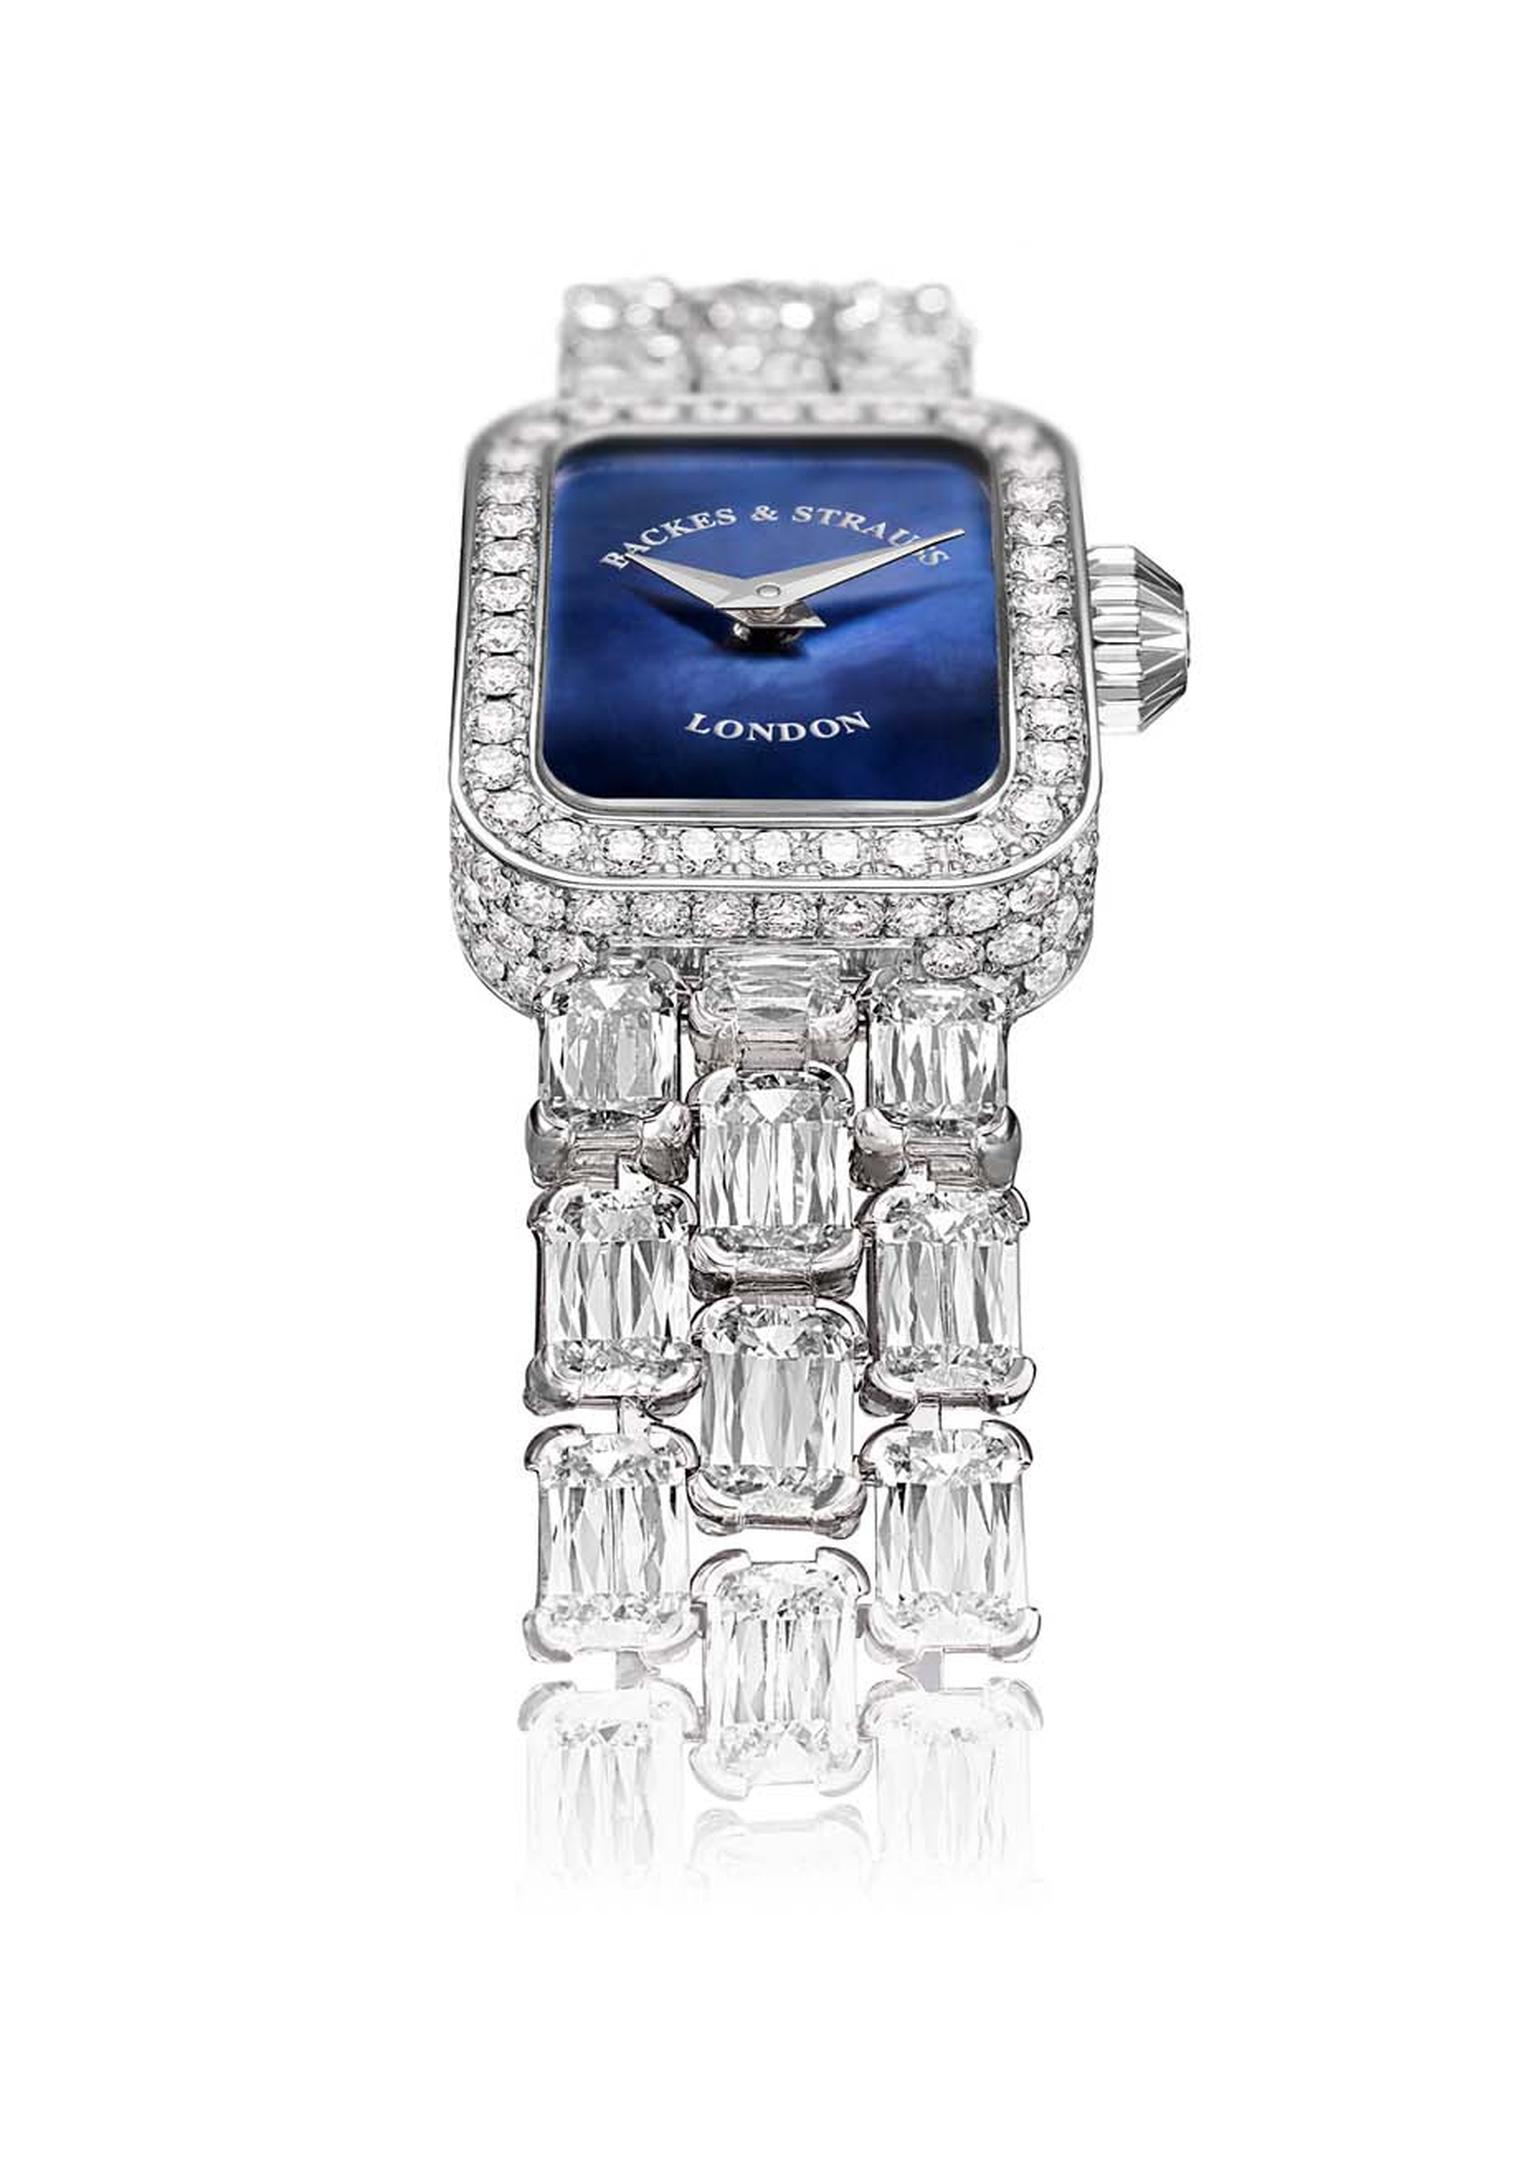 Designed to disperse the light with a fiery brilliance, the Backes & Strauss Royal Ashoka Empress watch incorporates 92 Ashoka diamonds on the bracelet.